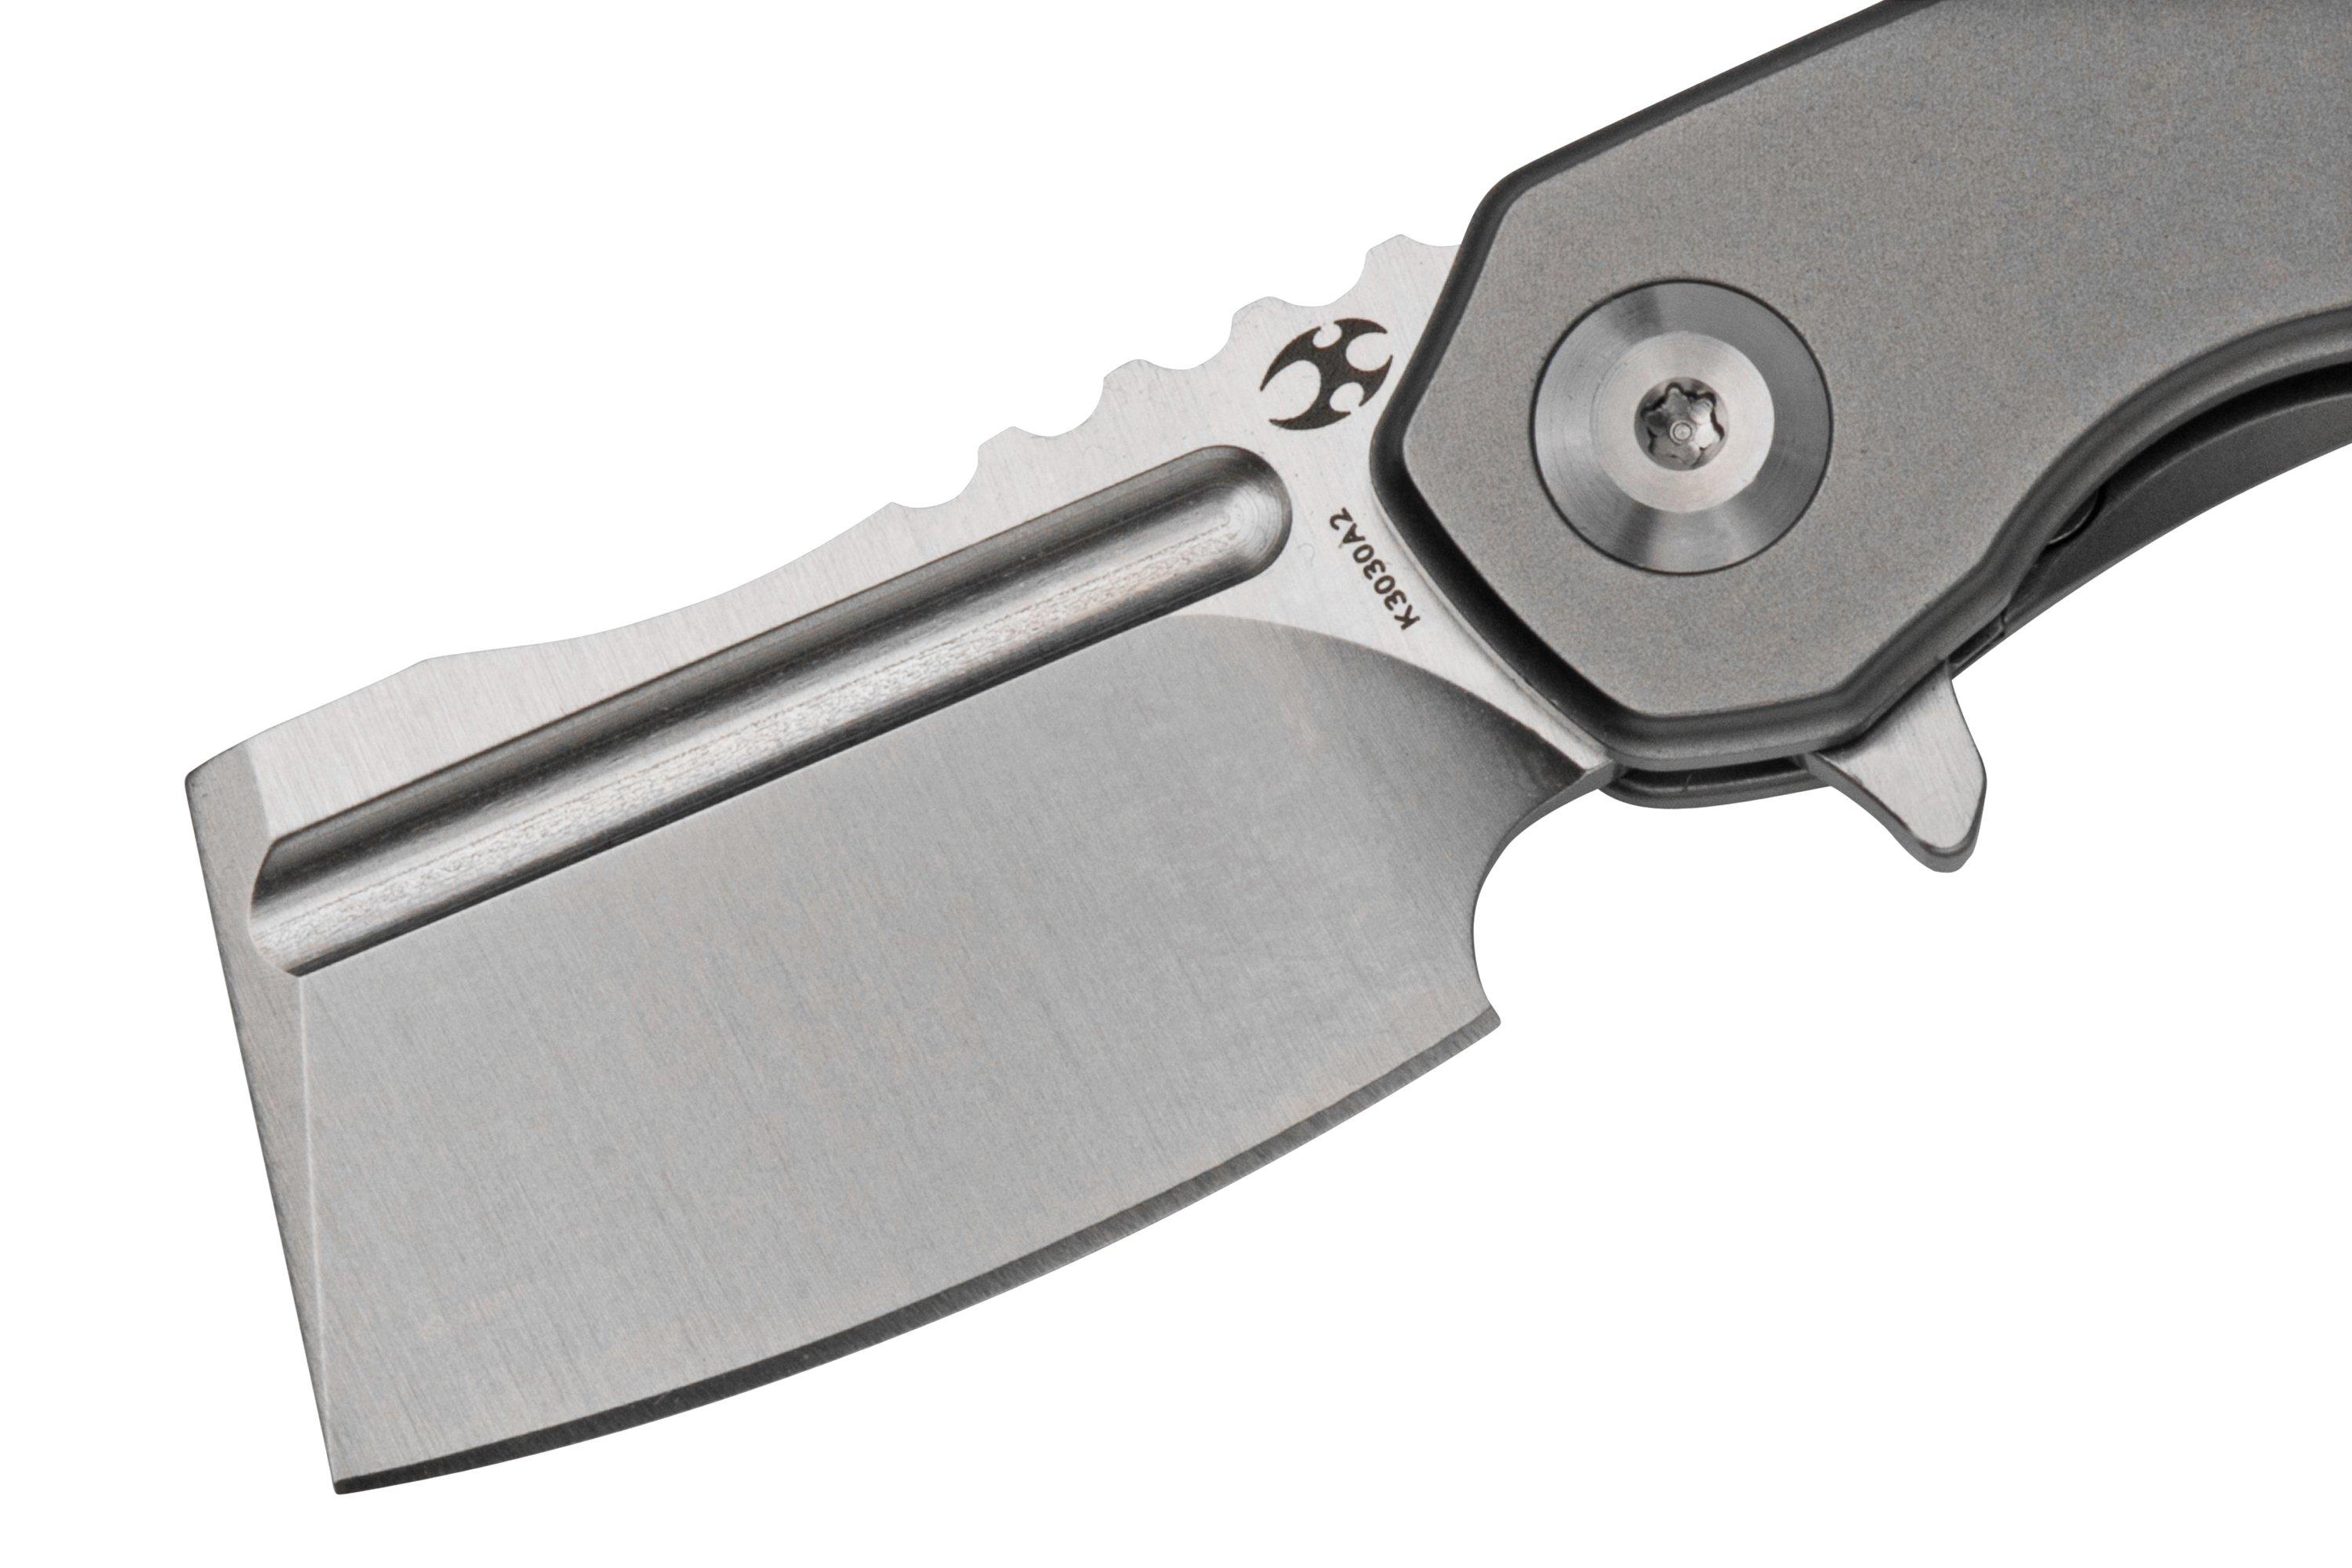 Kansept Mini Korvid K3030a2 Satin Cpm S35vn Titanium Pocket Knife Justin Koch Design